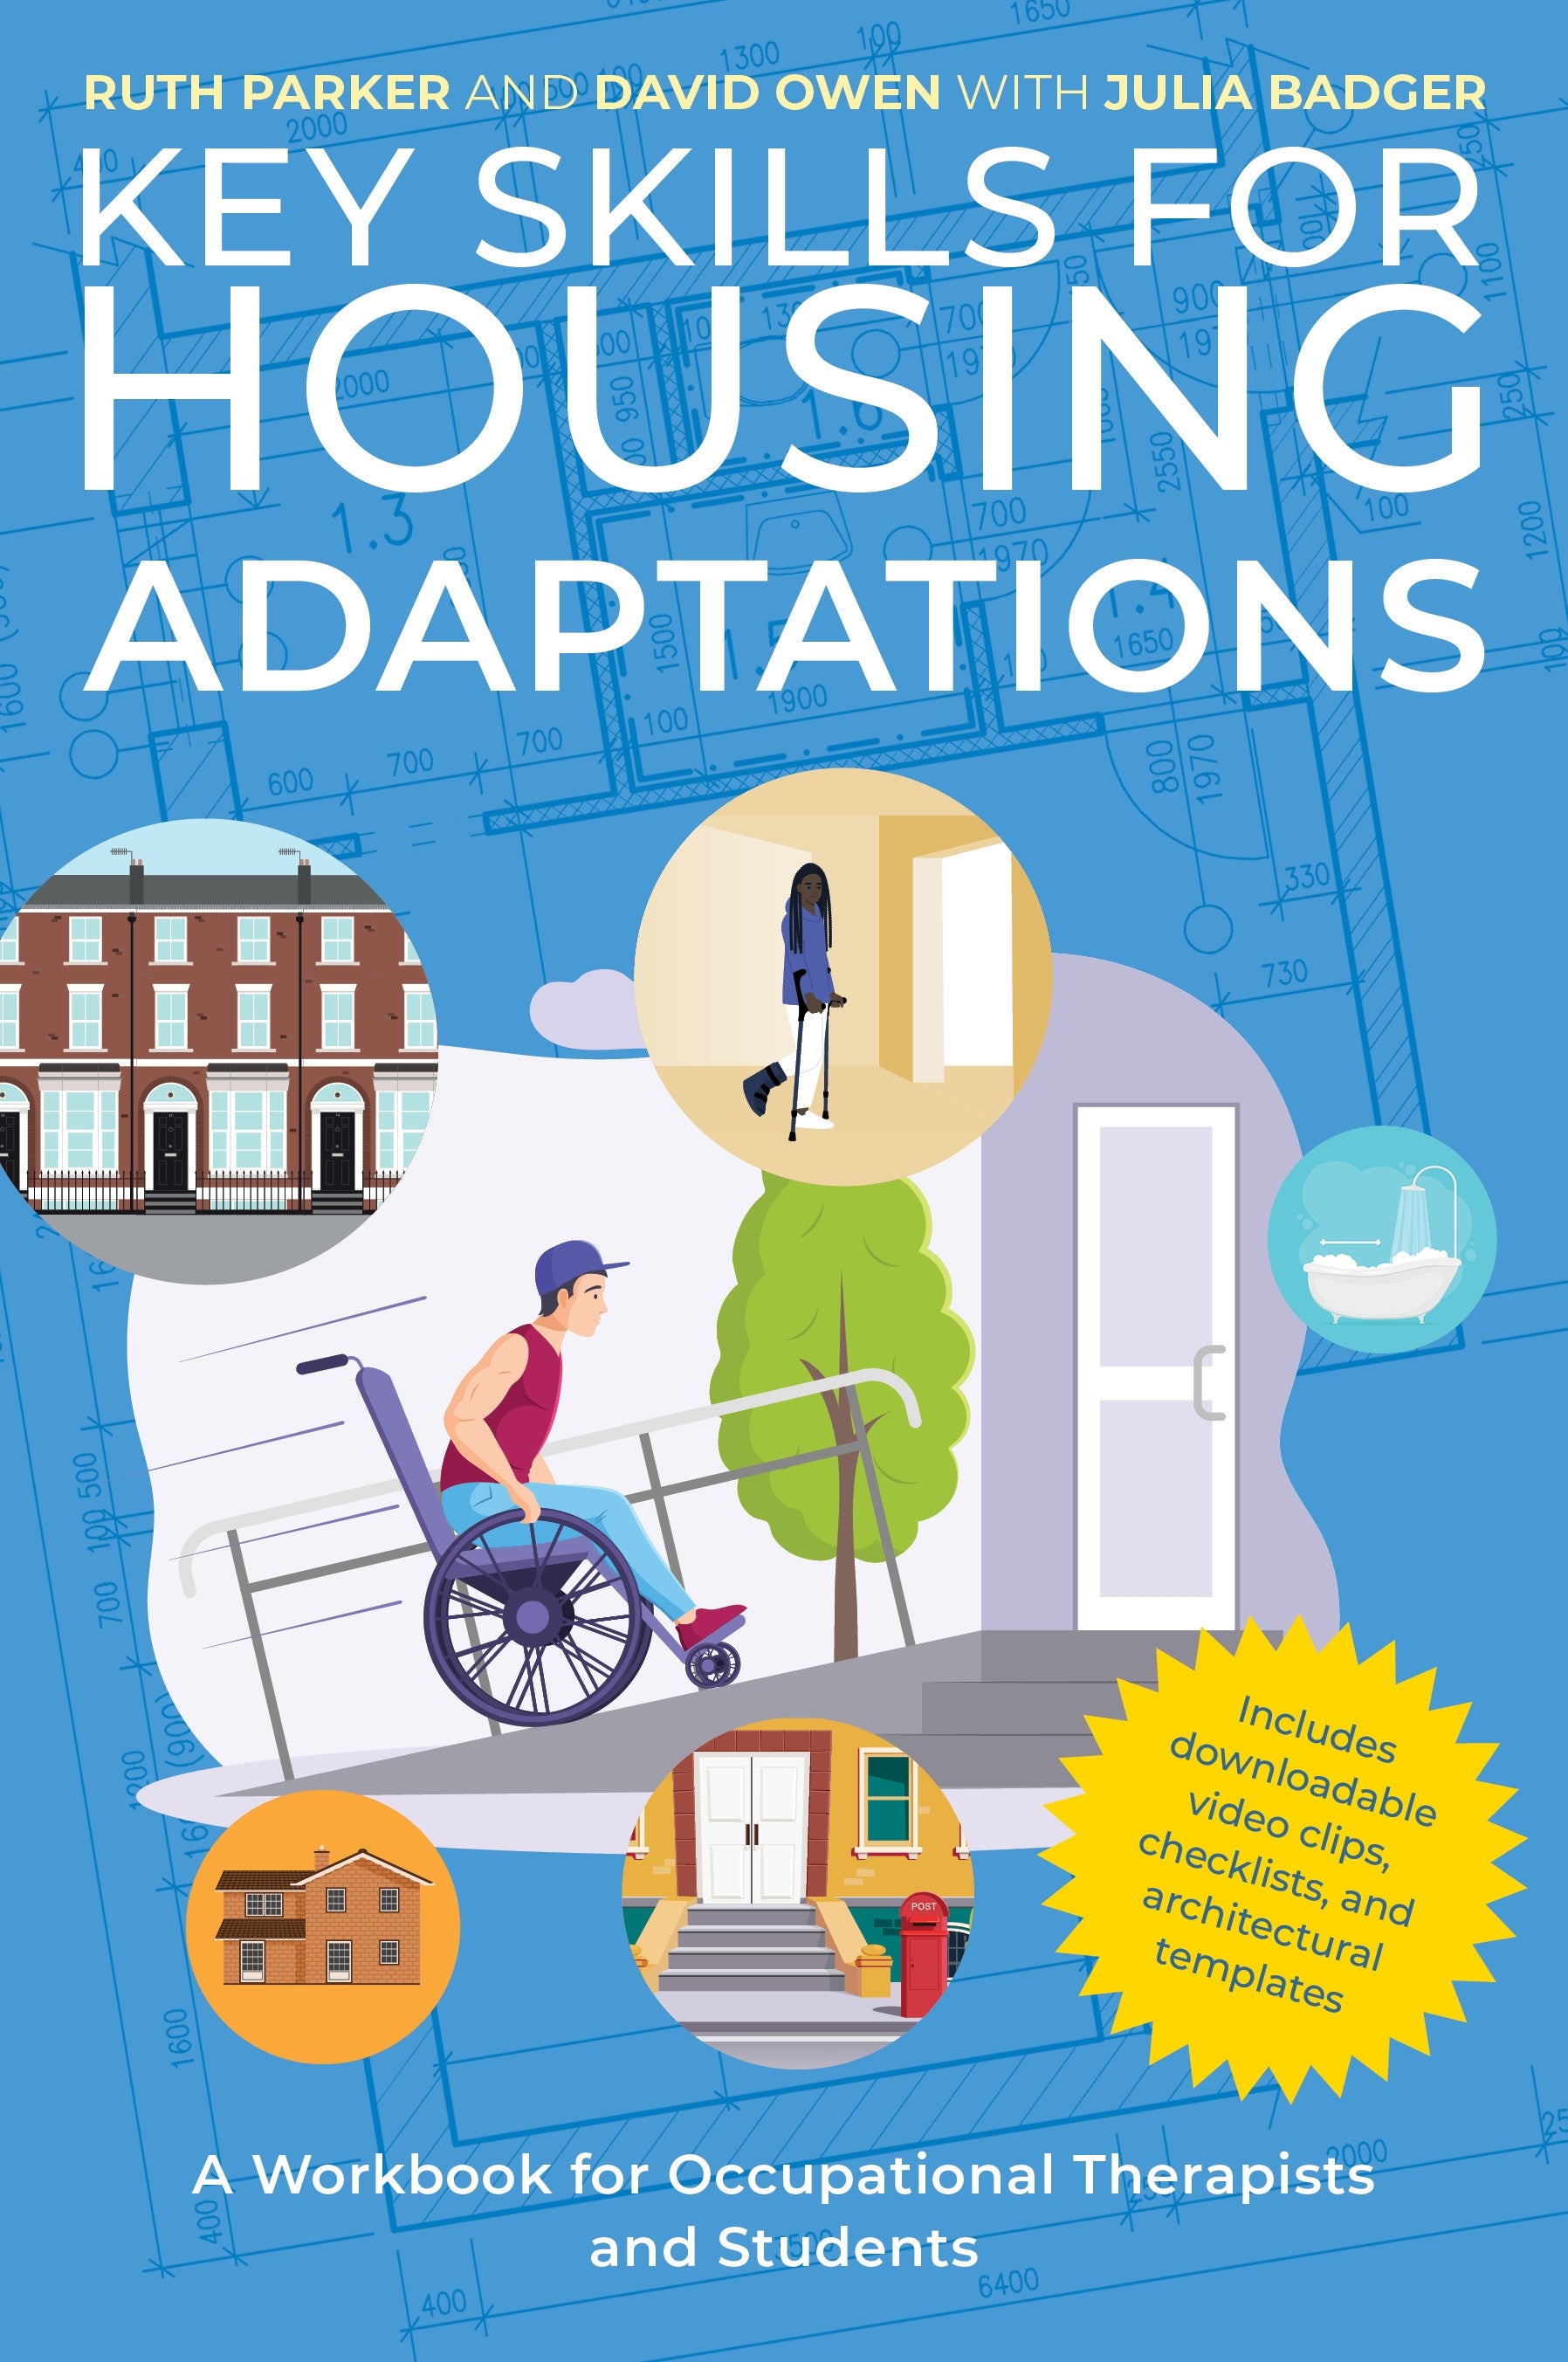 Key Skills for Housing Adaptations by Ruth Parker, Julia Badger, David Owen